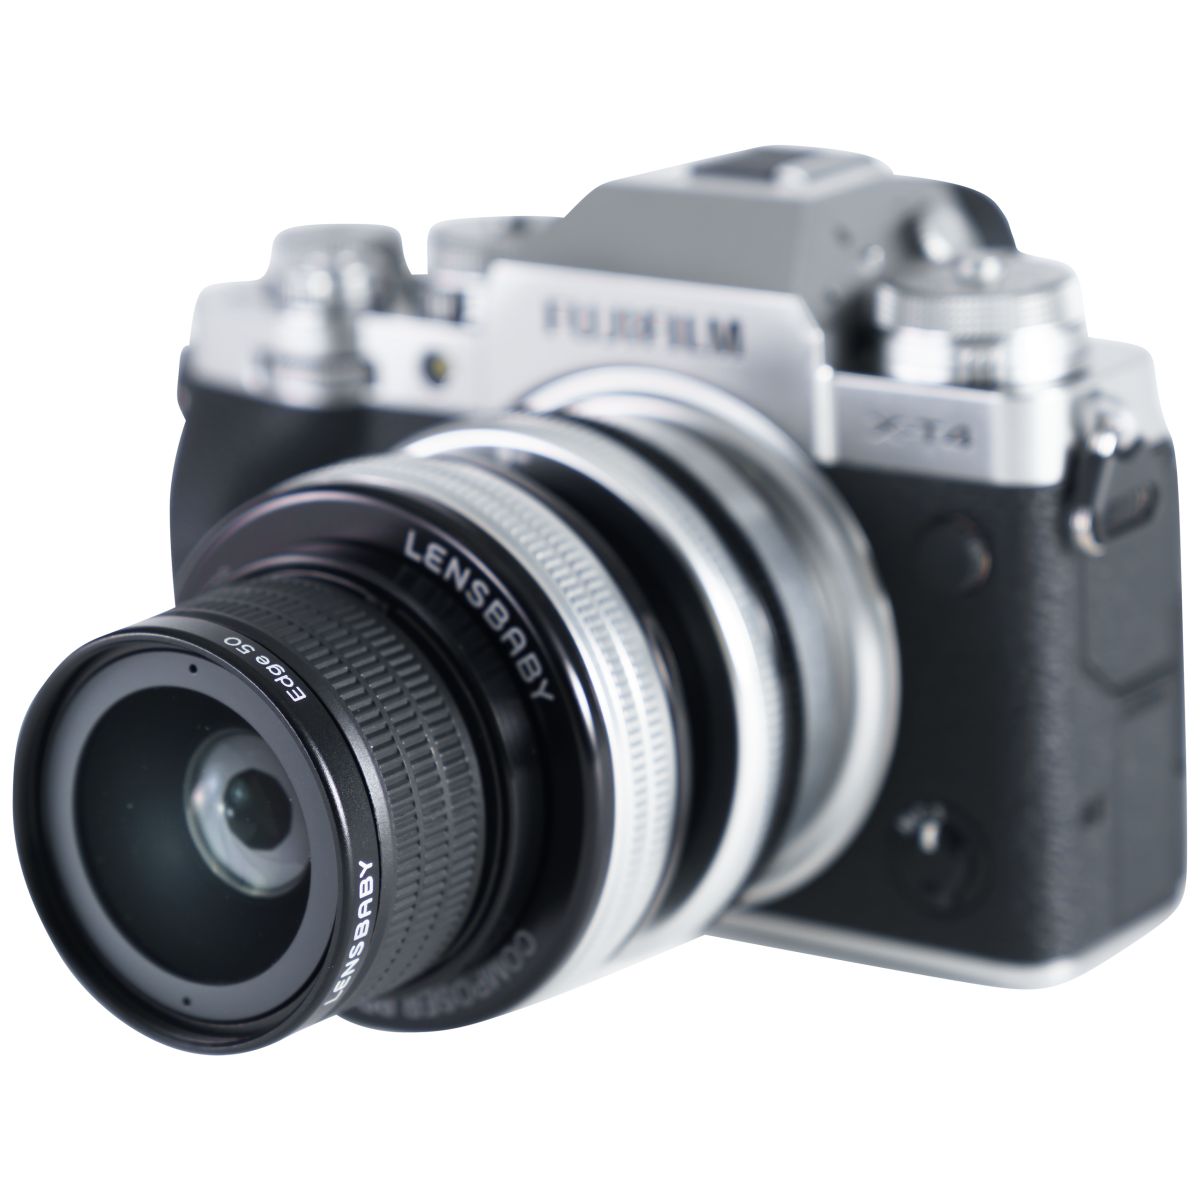 Lensbaby Composer Pro II Edge 50 Nikon F